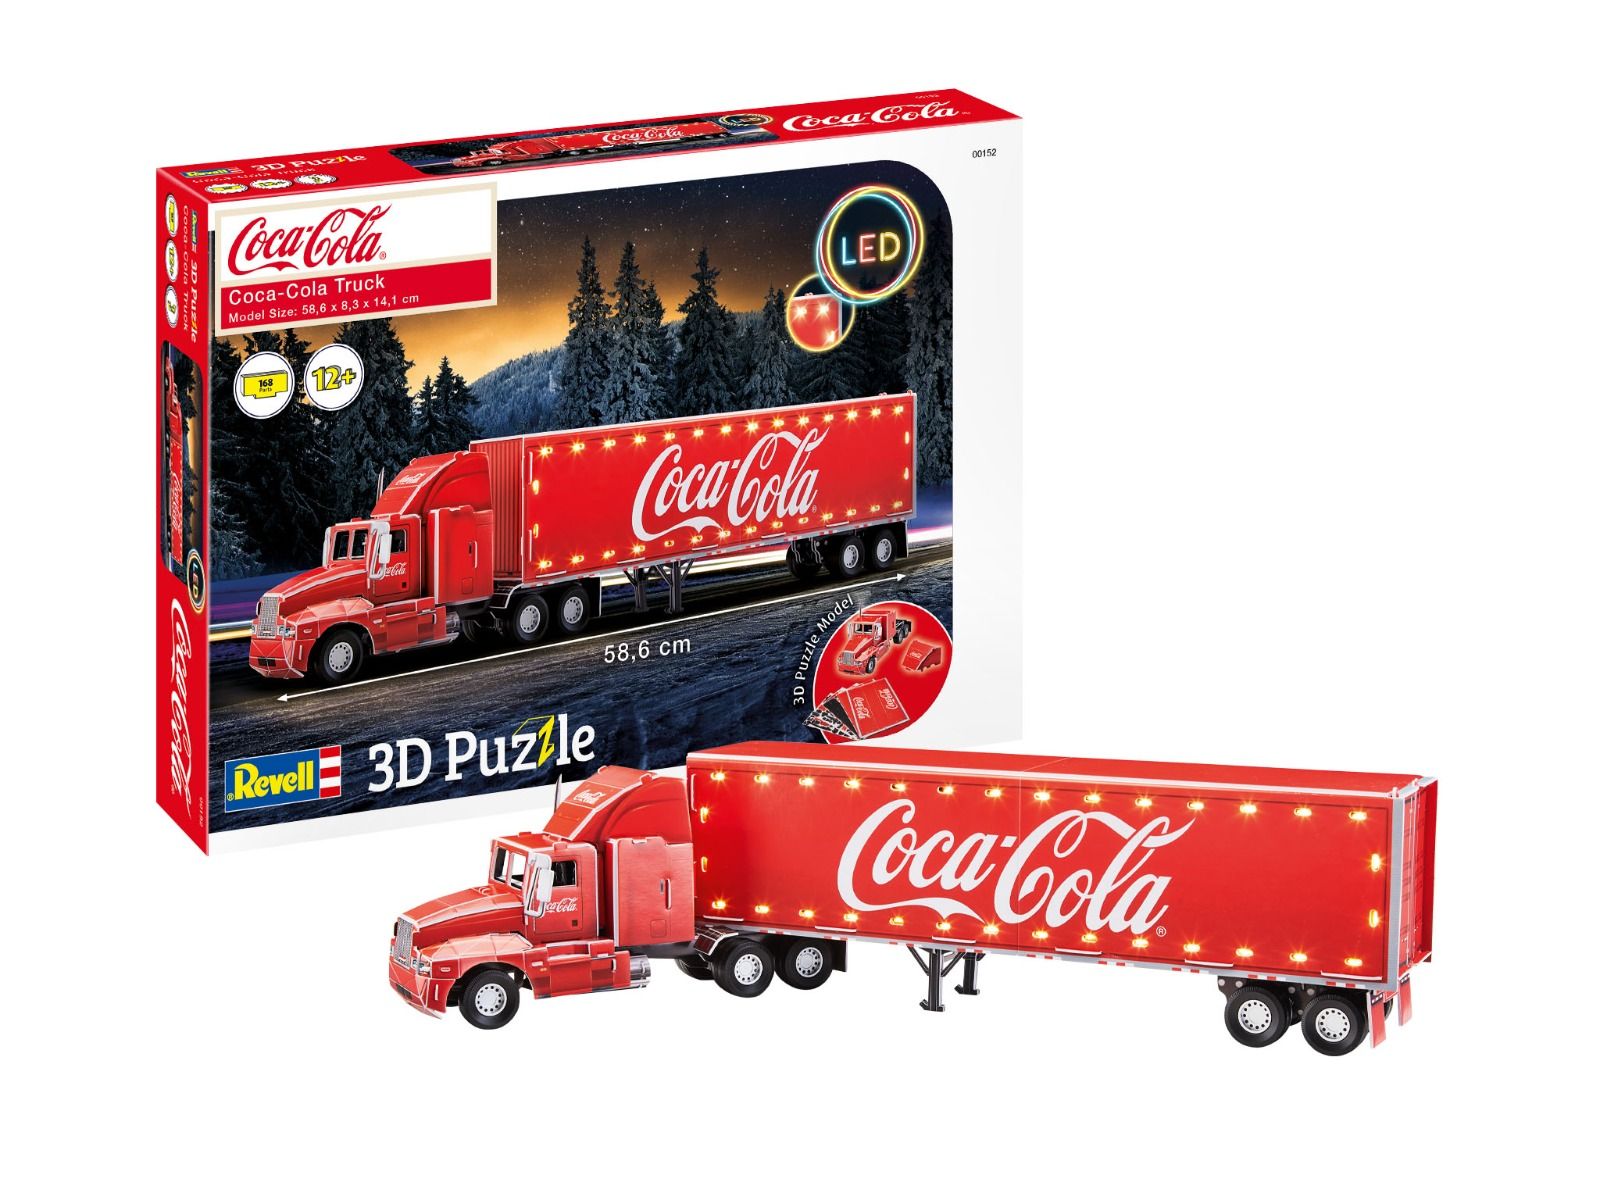  Revell LED Coca Cola Truck 3D Puzzle